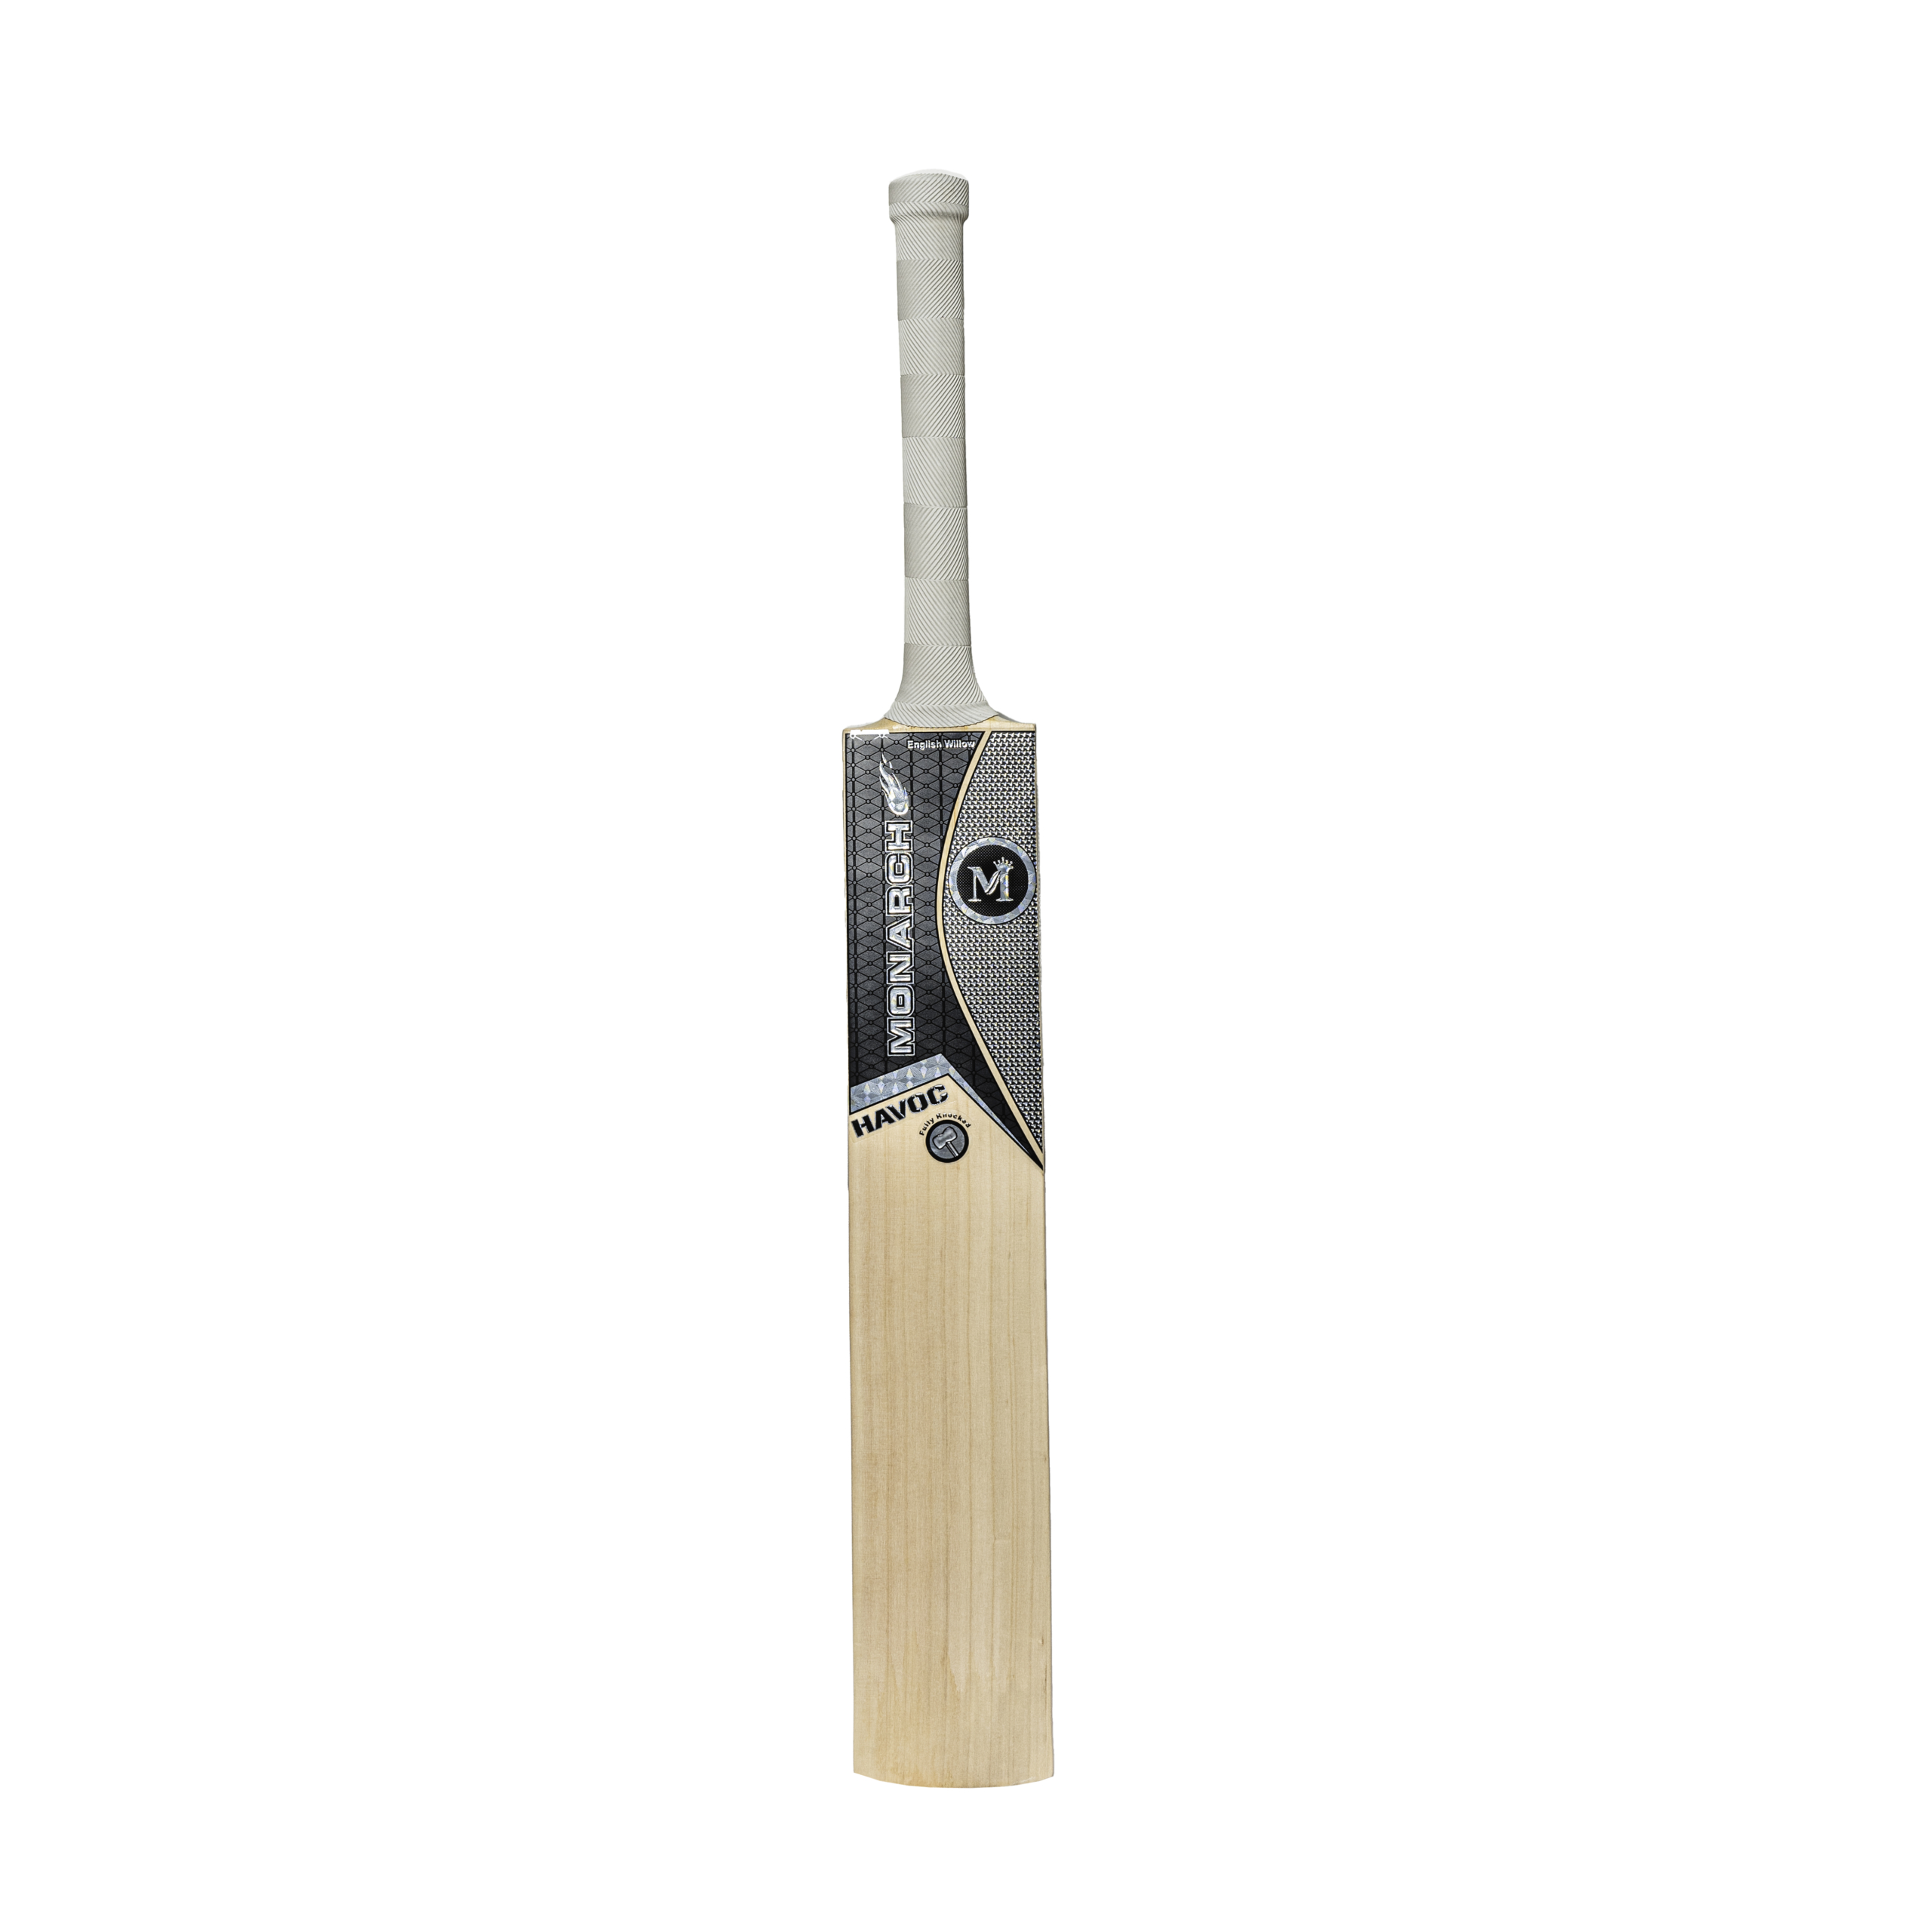 Havoc Cricket bat